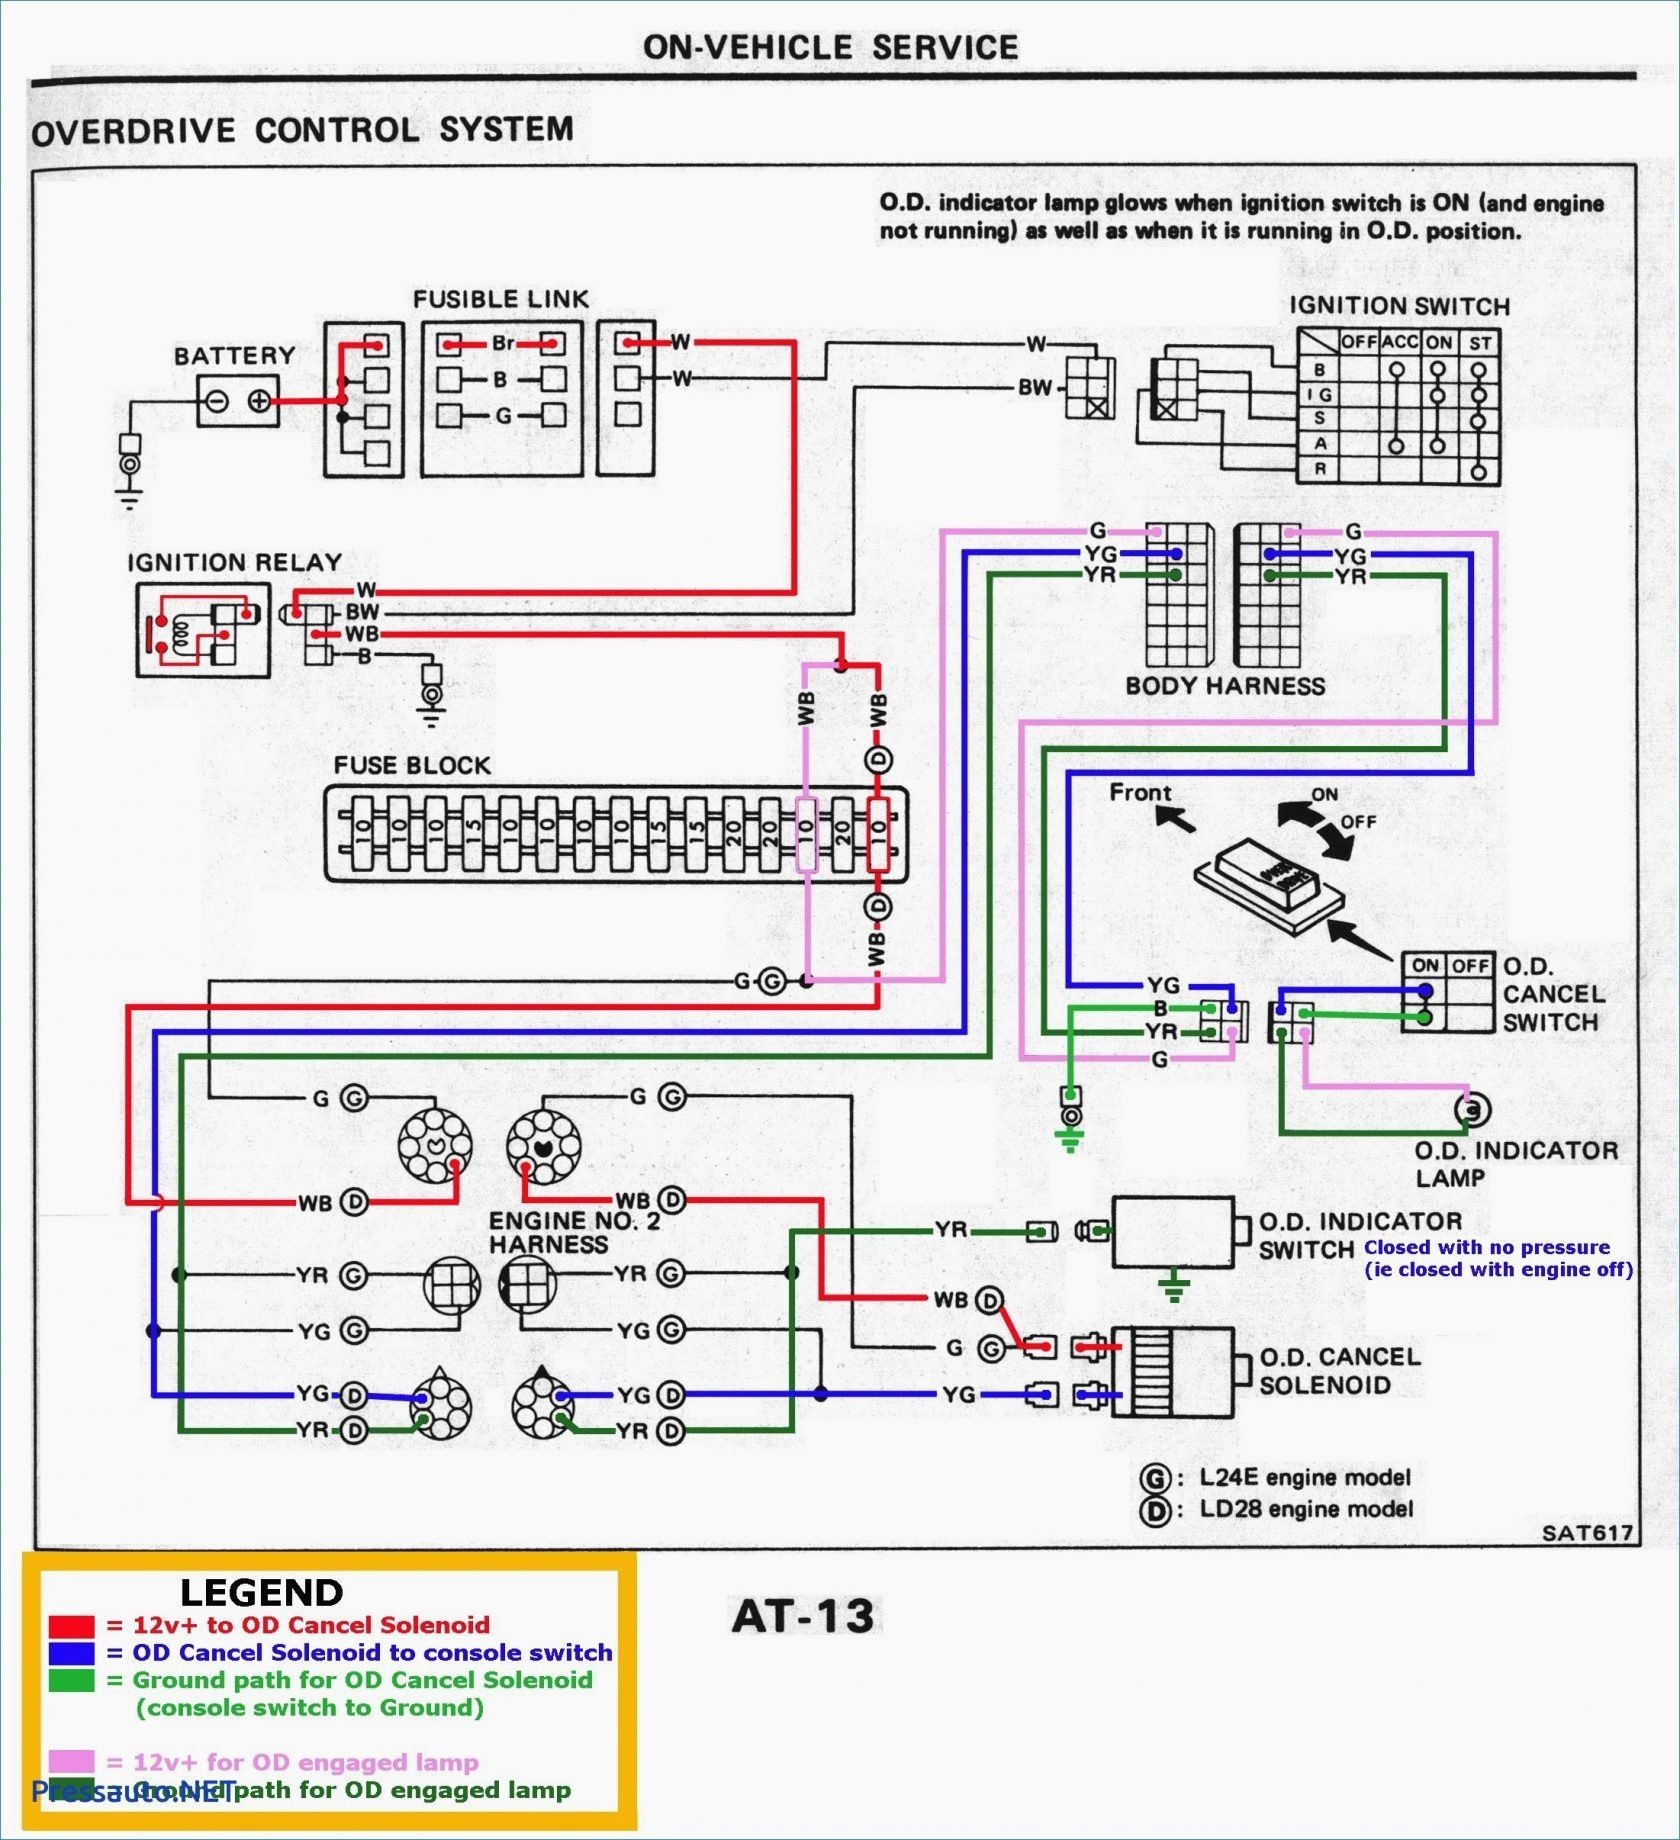 Electric Heat Wiring Diagram Hvac Electrical Diagrams Wiring Diagram Datasource Of Electric Heat Wiring Diagram